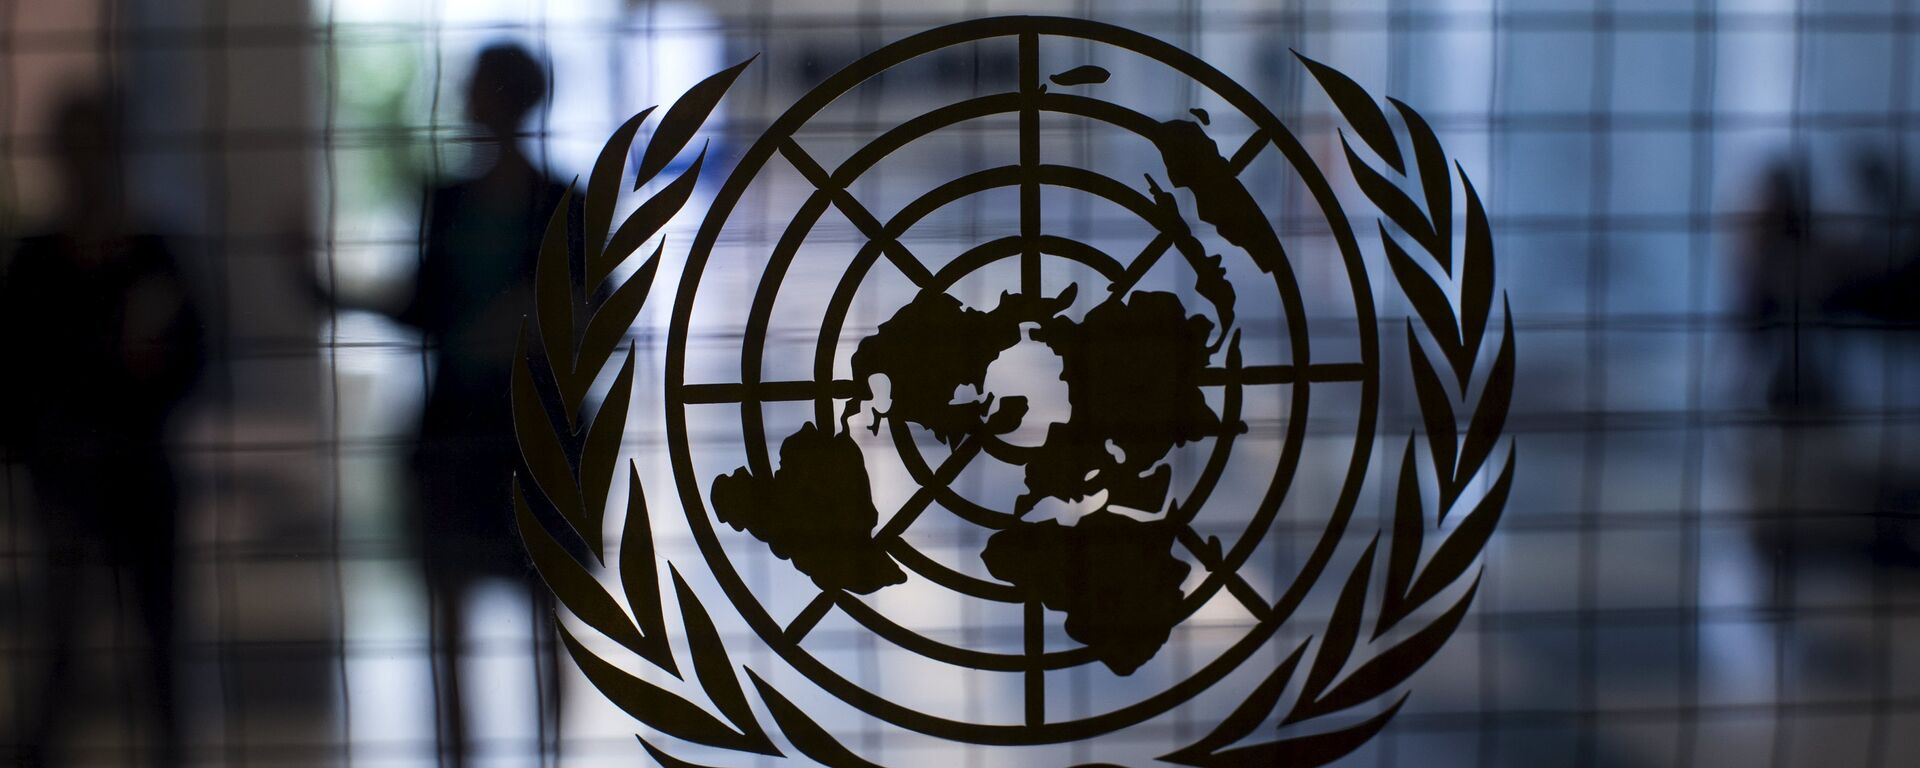 Logo de la ONU - Sputnik Mundo, 1920, 26.11.2020